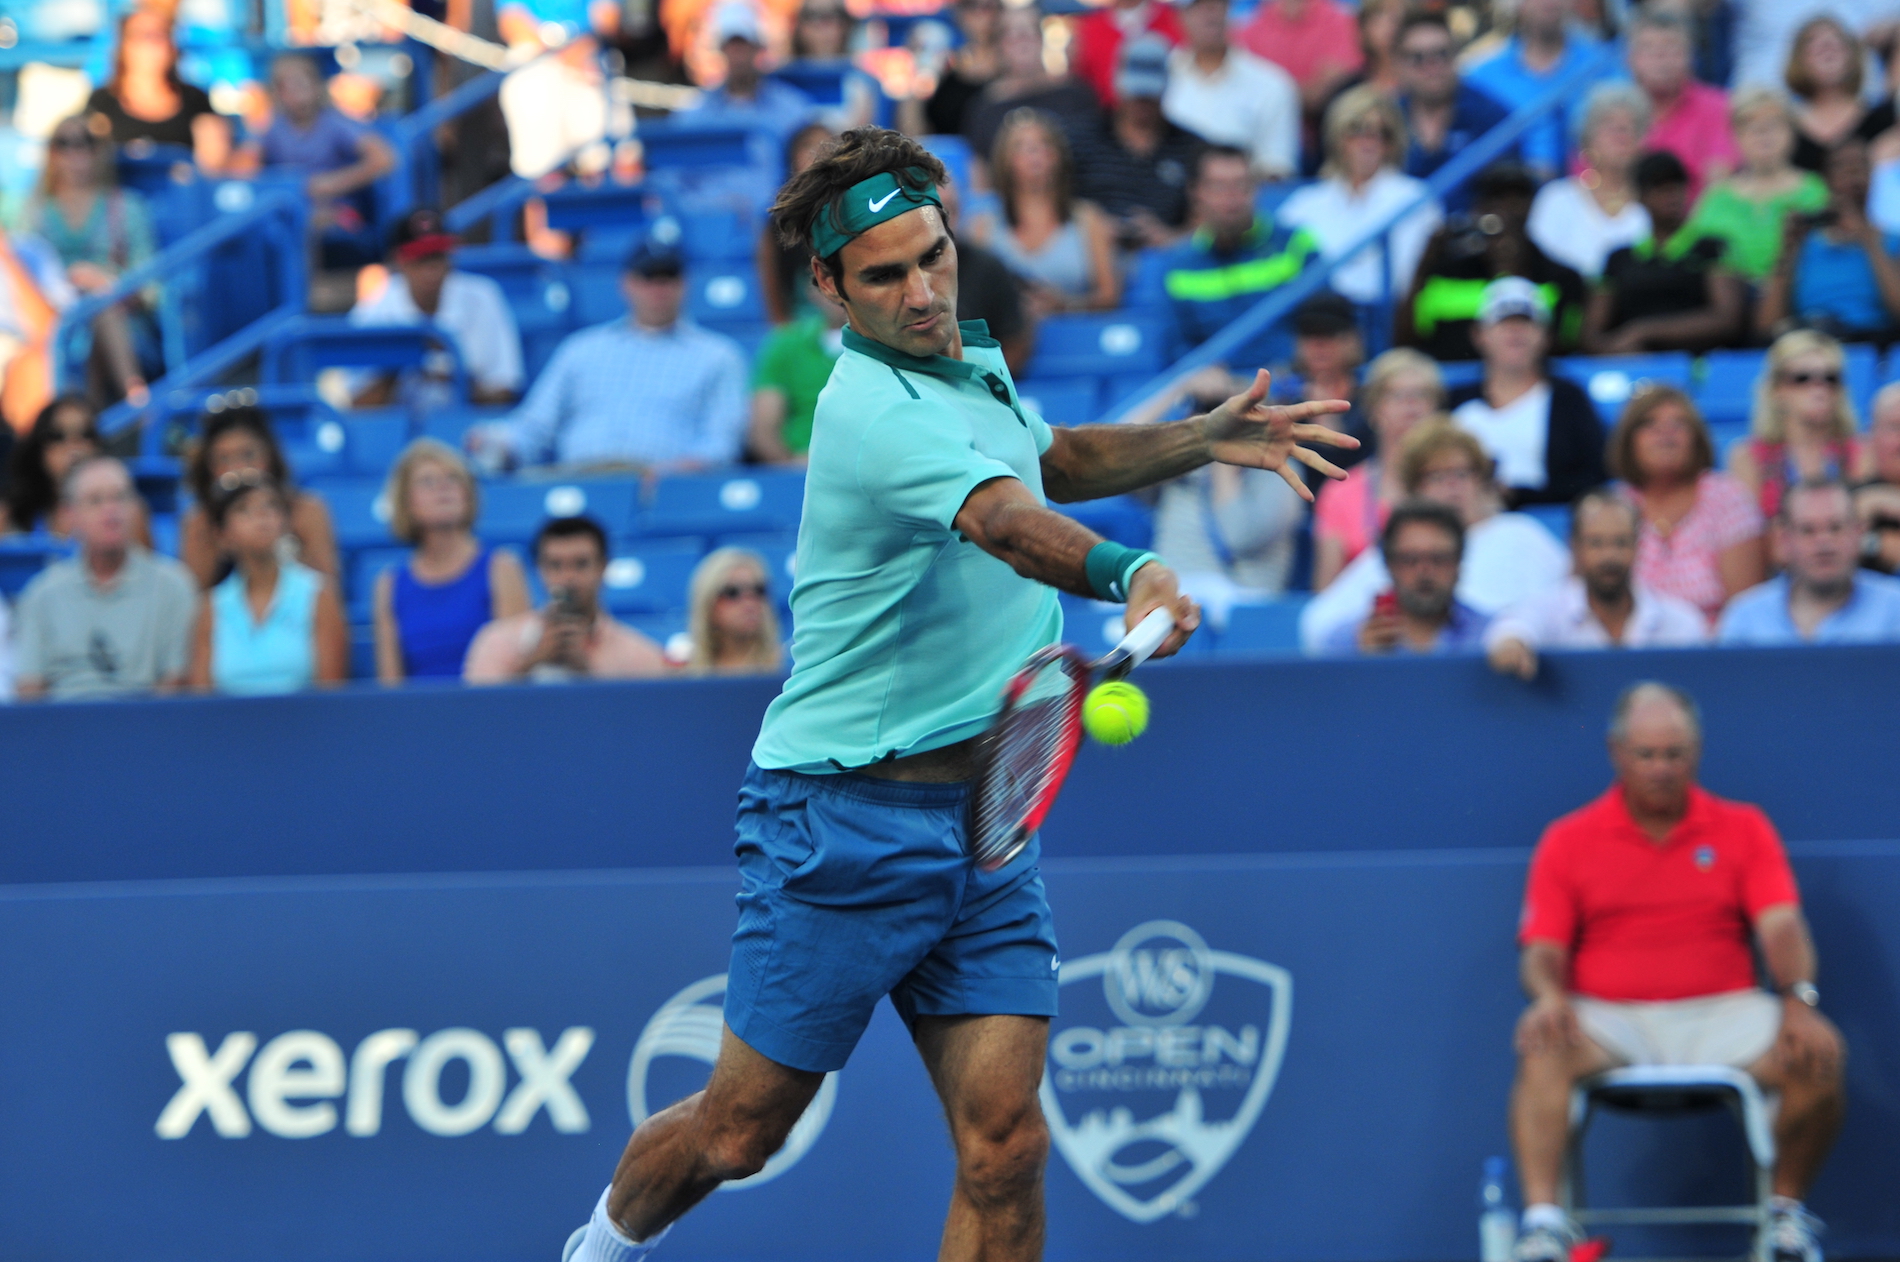 2014 - Roger Federer